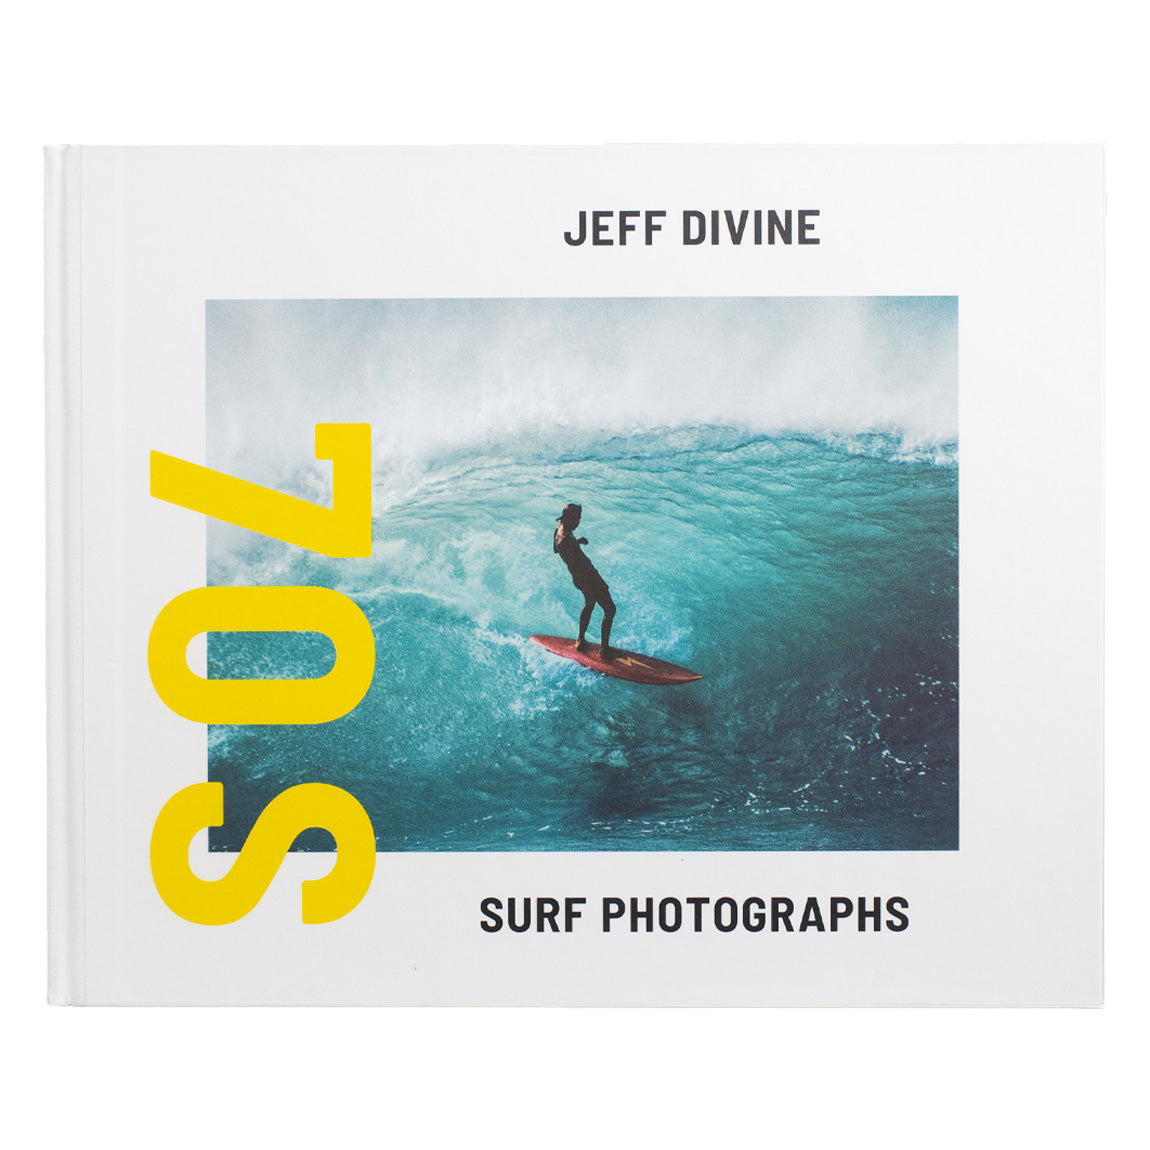 JEFF DIVINE: 70S SURF PHOTOGRAPHS